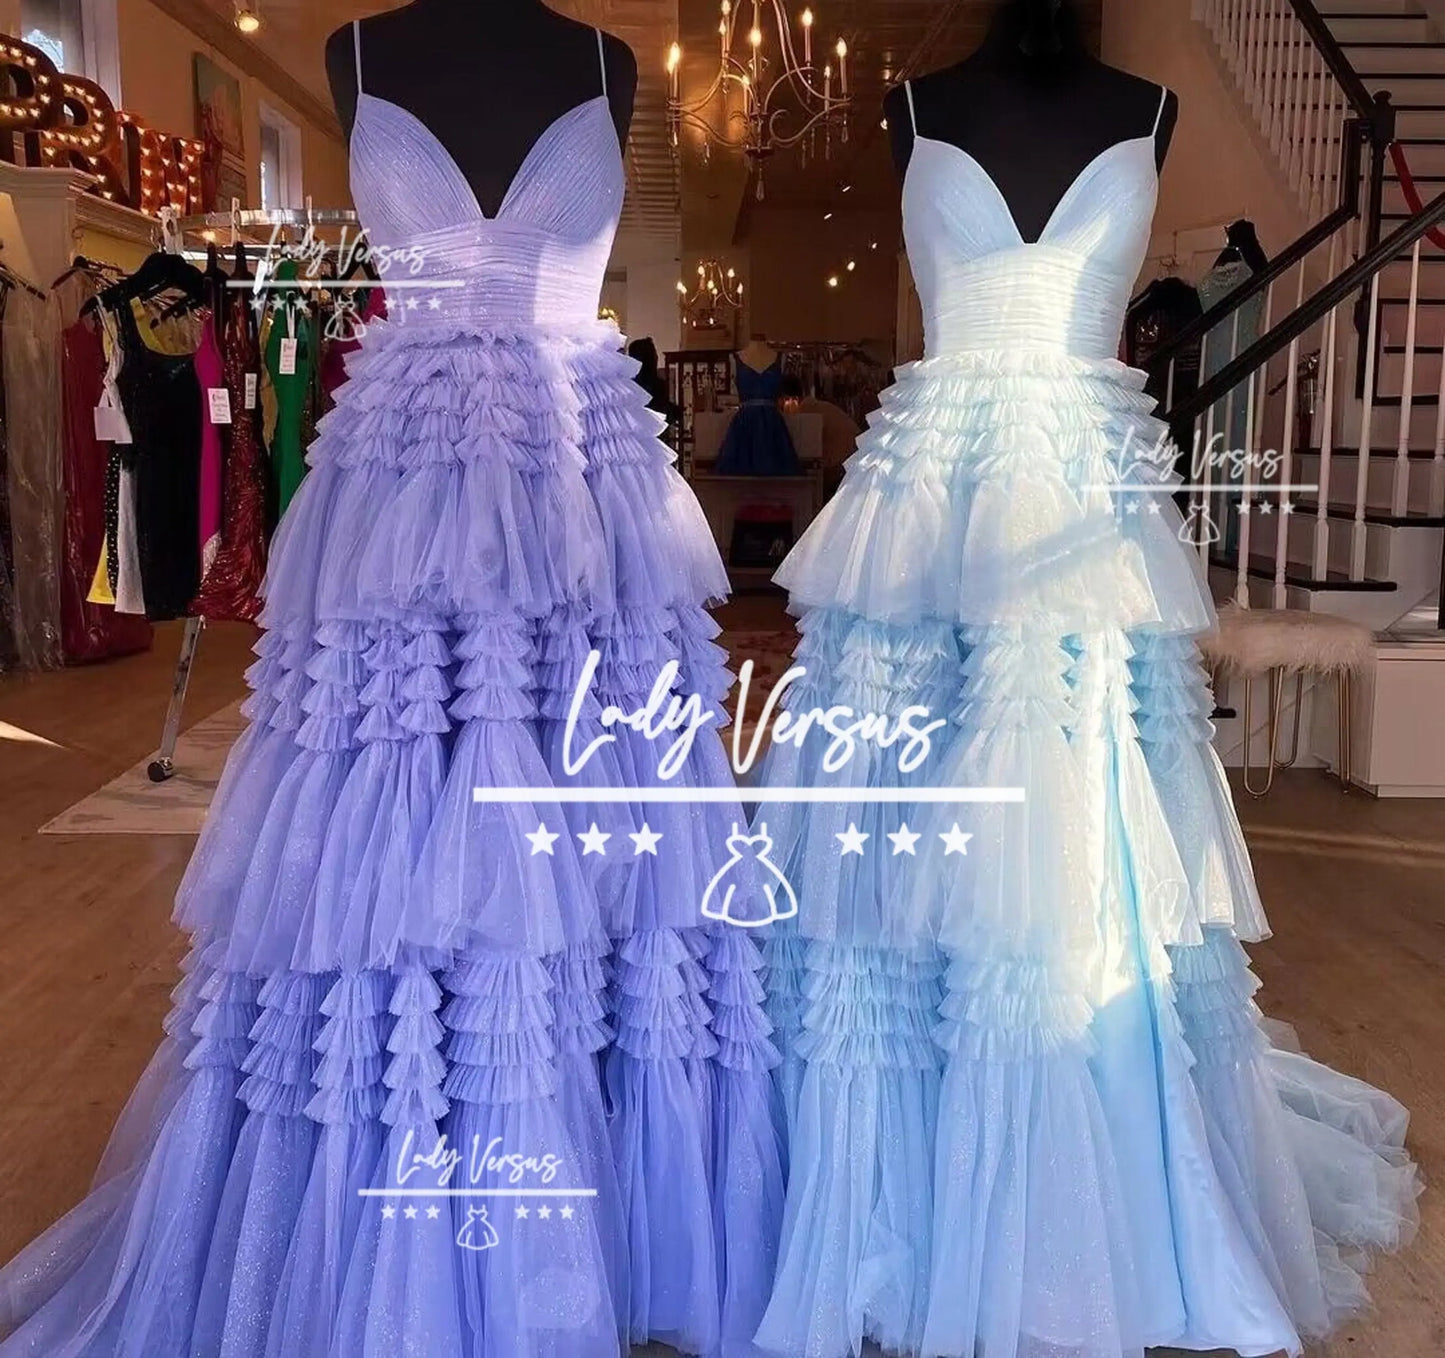 Prom princess dress/ Off Shoulder dress/ Ruffle skirt/ spaghetti straps/ evening dress/ prom dress/ wedding dress Lady Versus